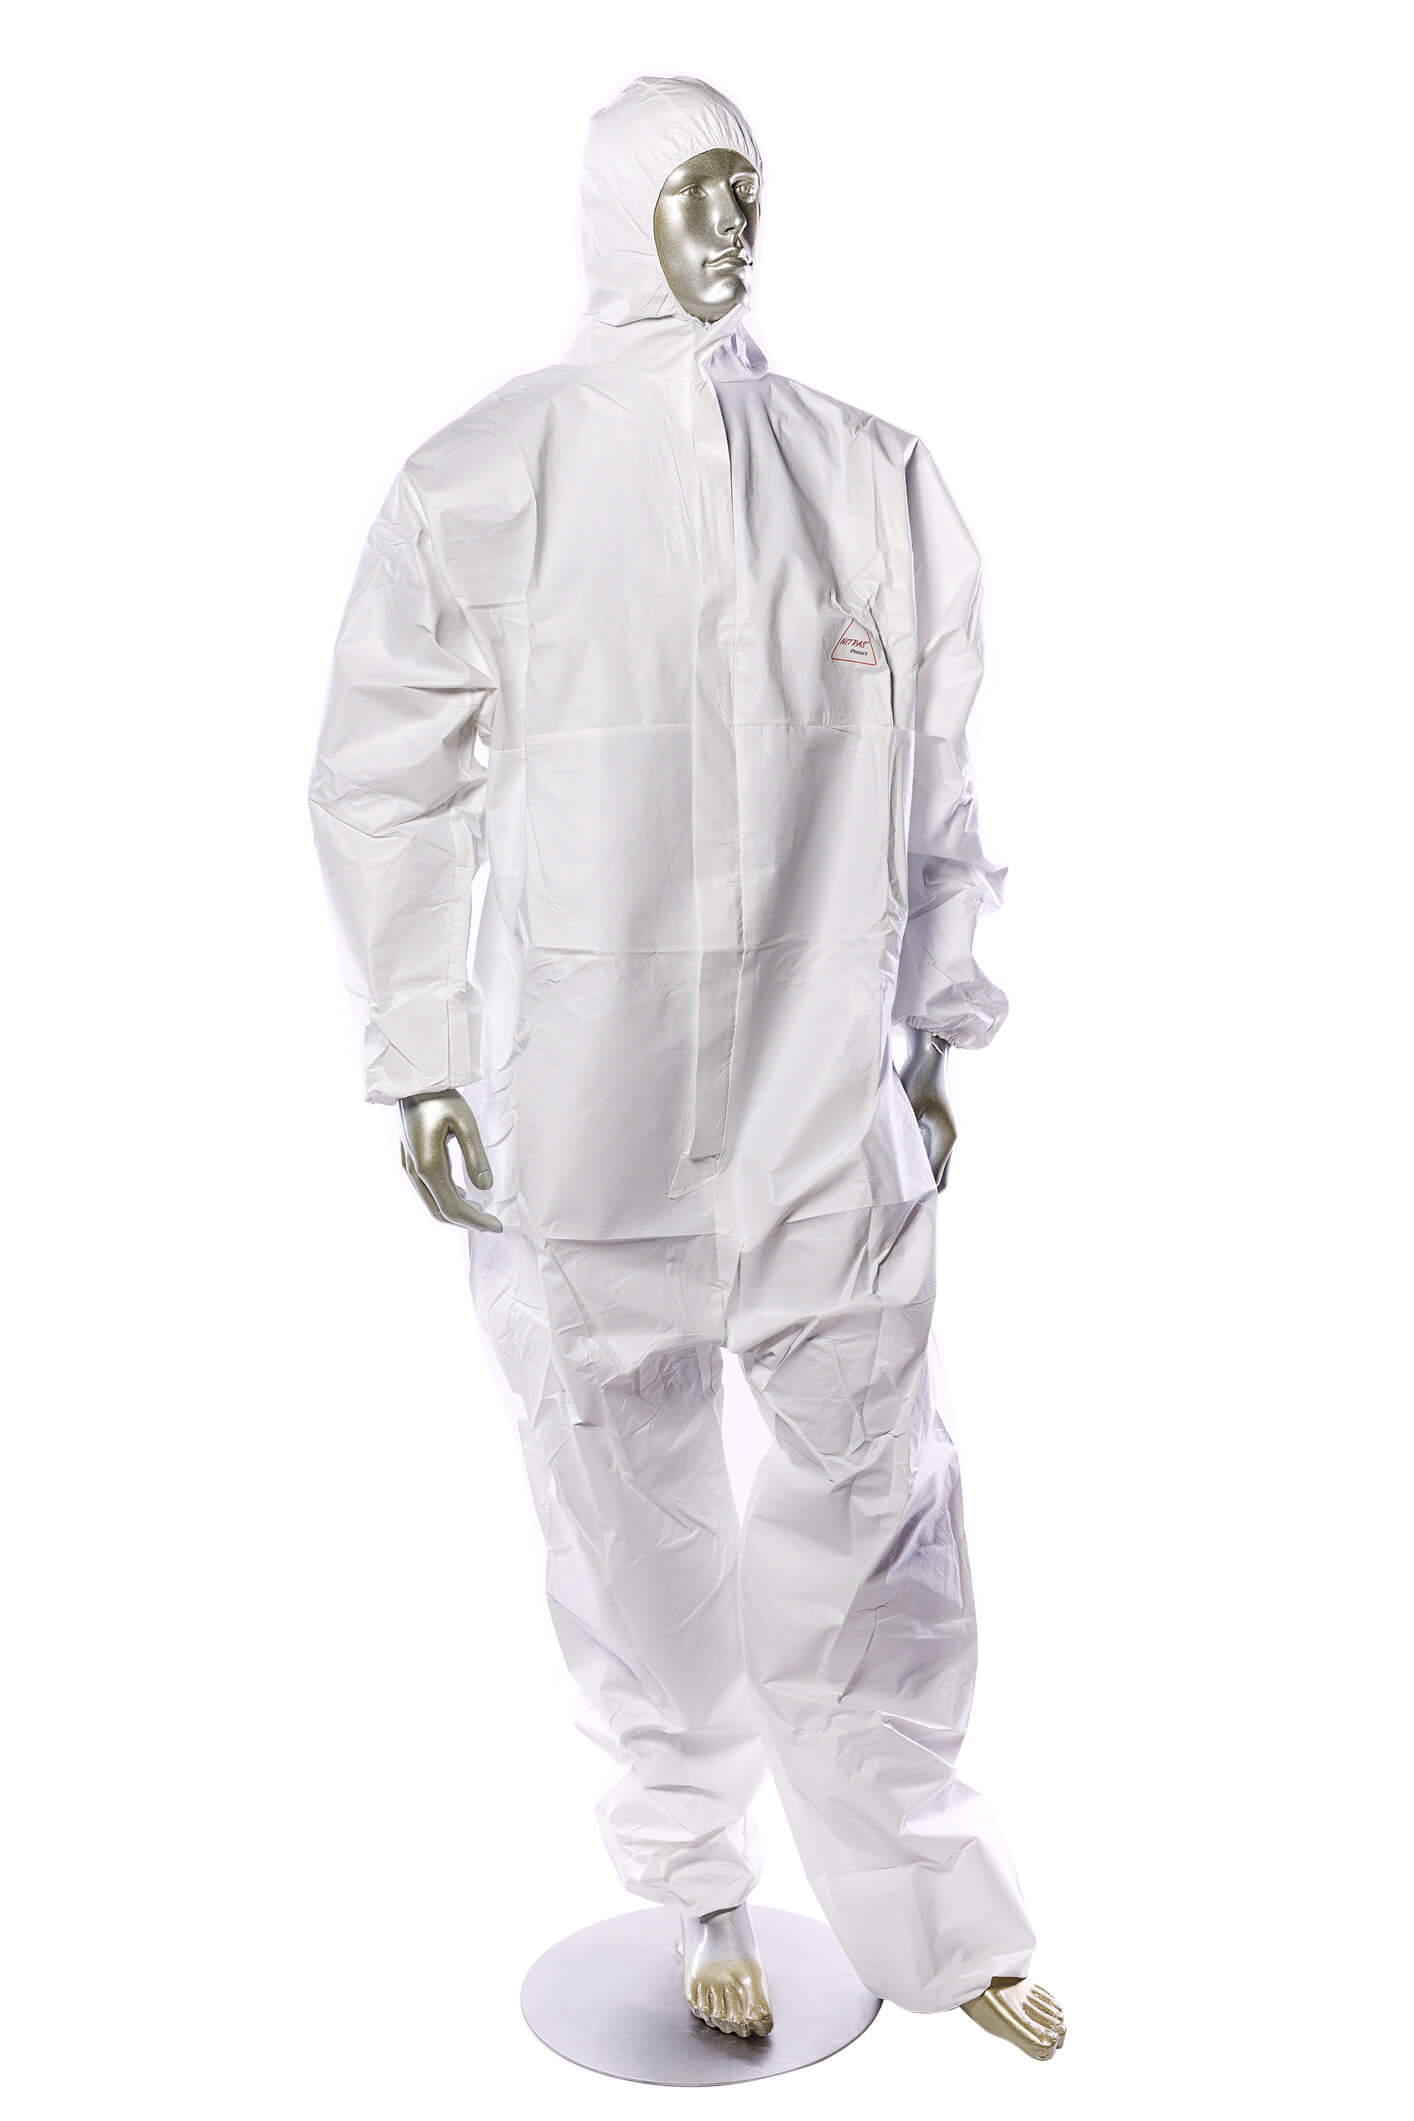 NITRAS Ochranný oblek Protect overal Velikost: XL